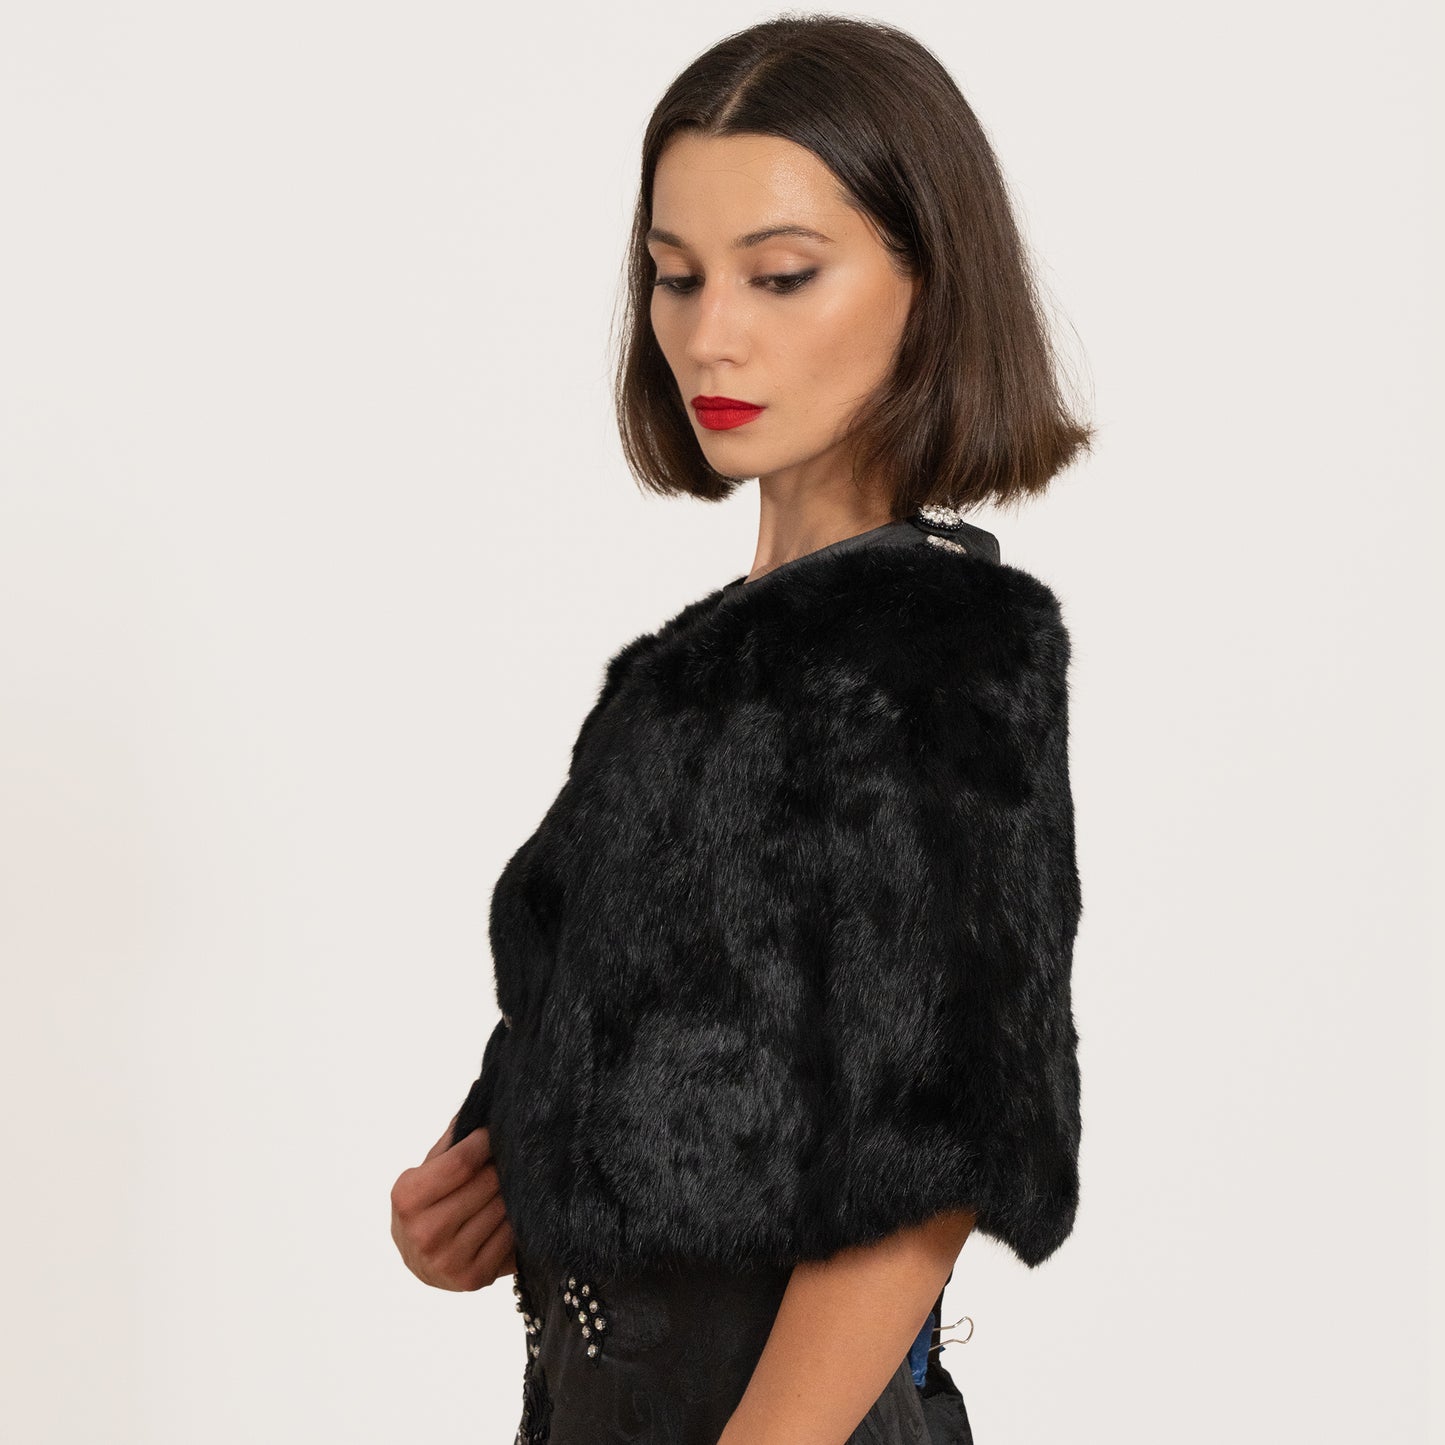 brunette model wearing an elegant evening fur